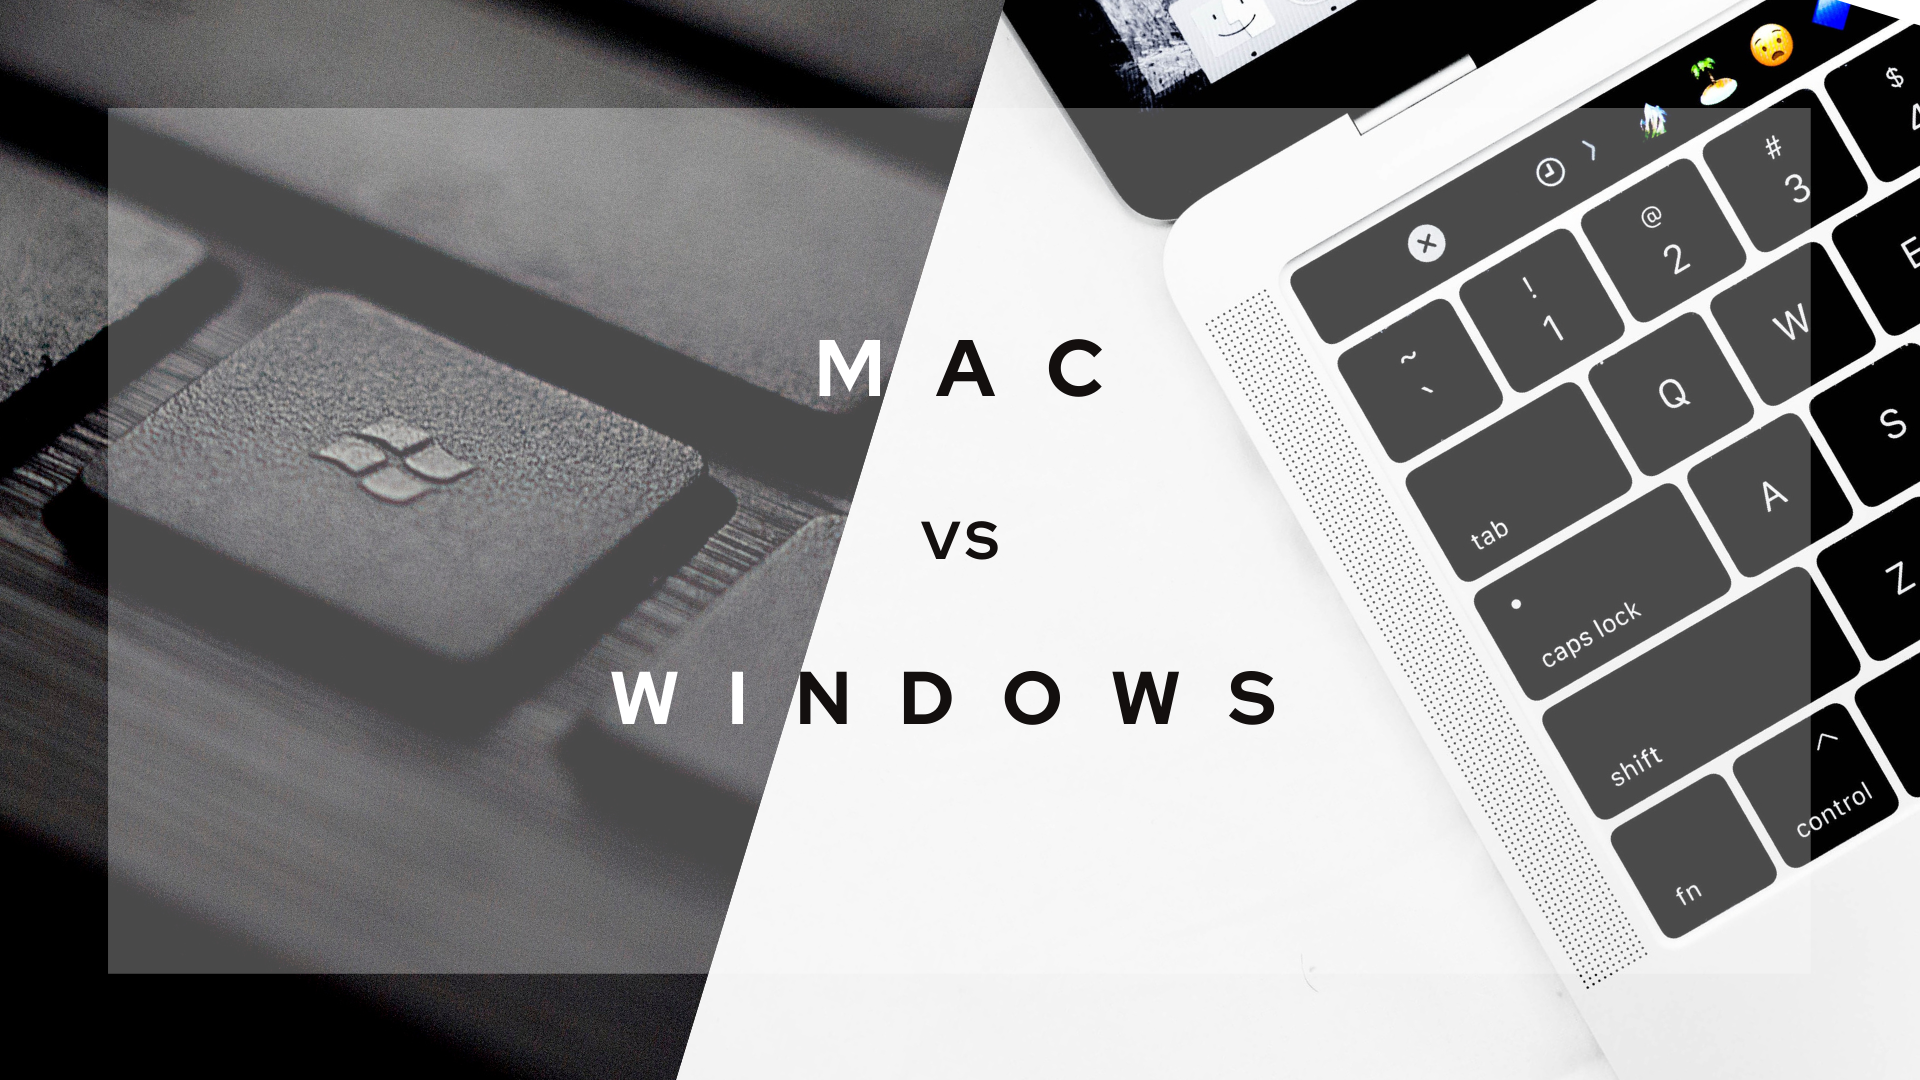 mac vs windows for video editing